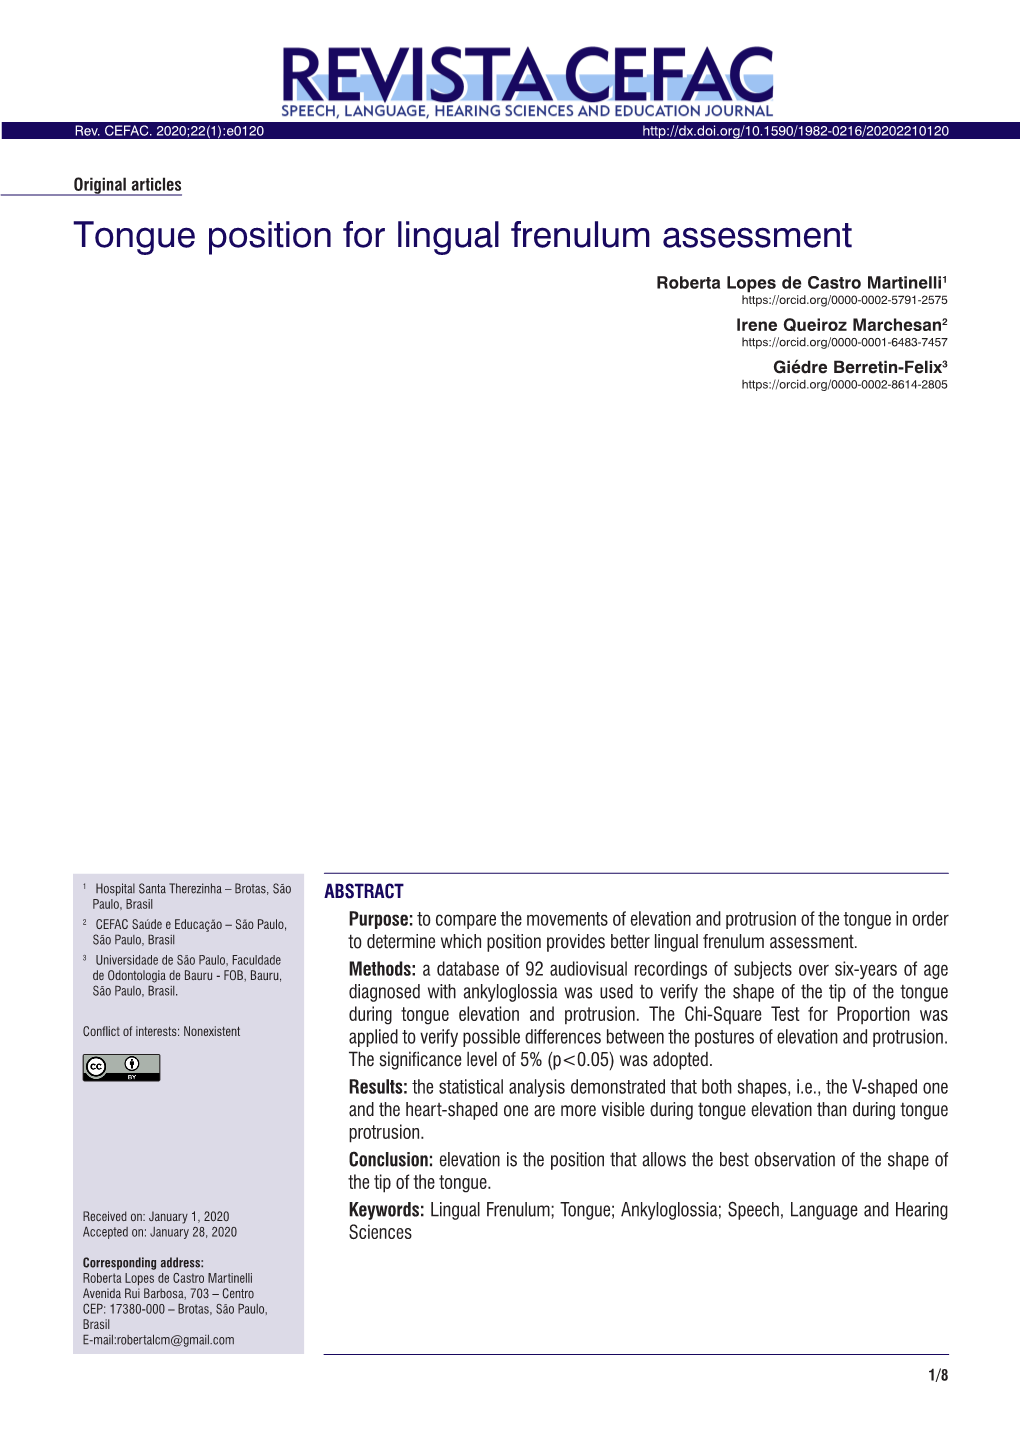 Tongue Position for Lingual Frenulum Assessment